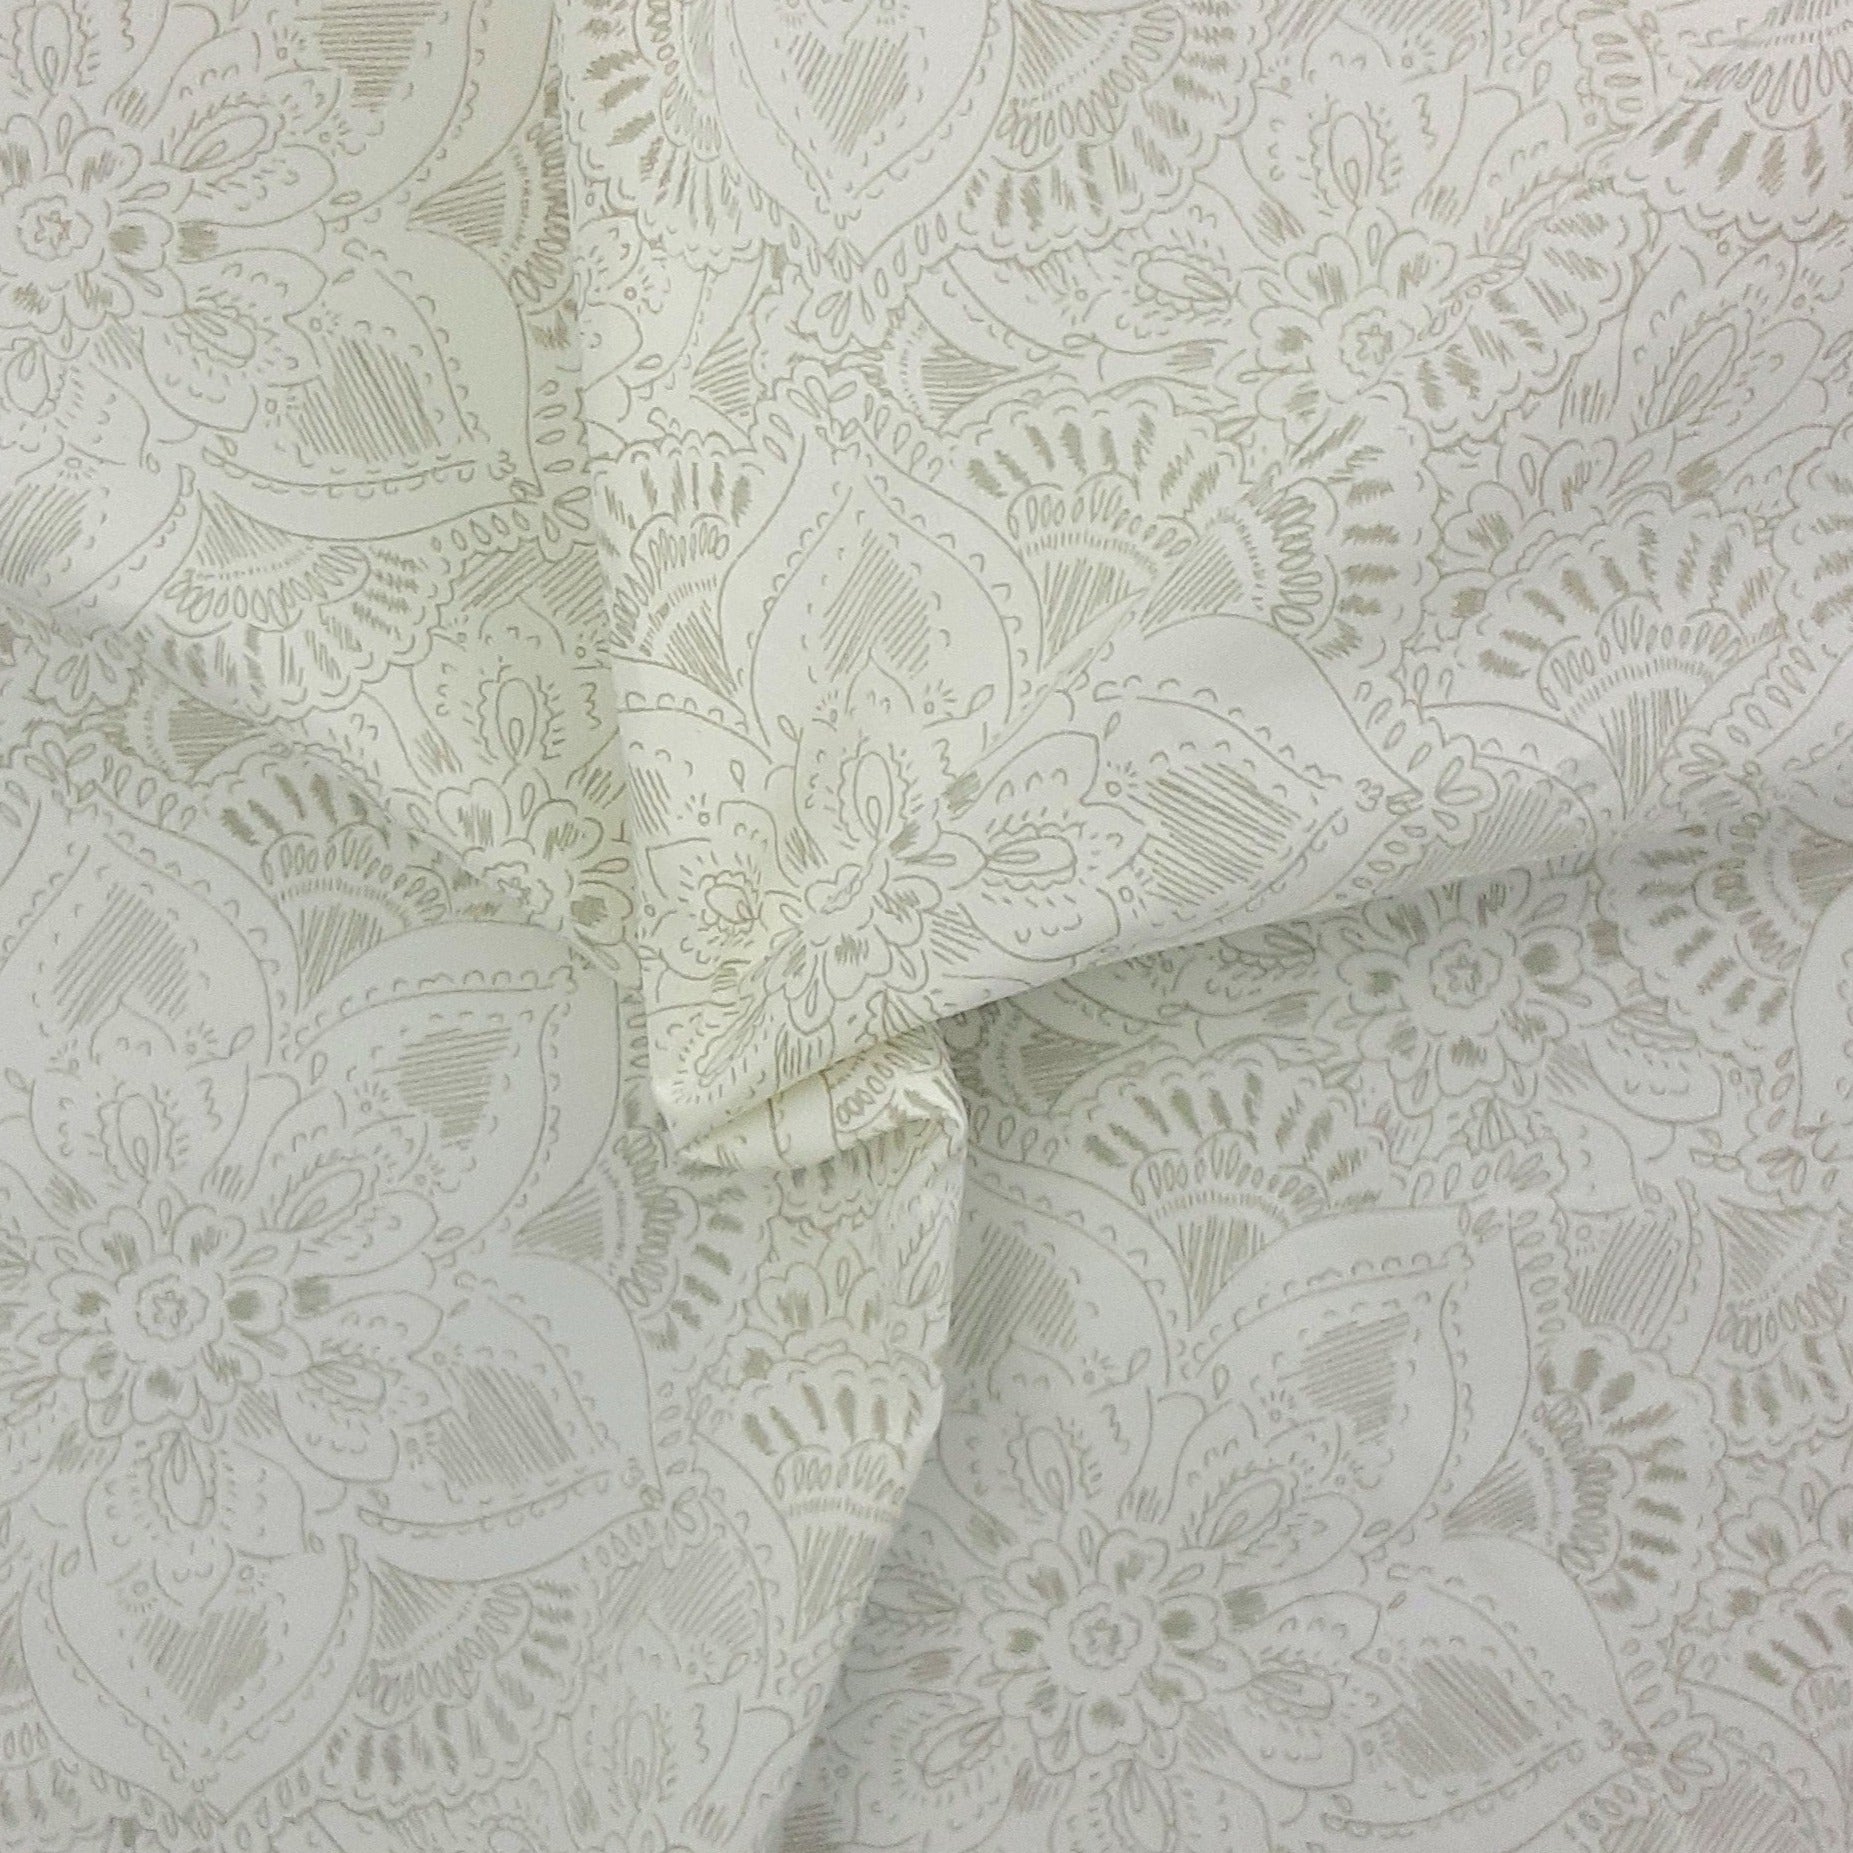 White #U164 Wall Flower Children's Cotton Print Woven Fabric - SKU 6821A